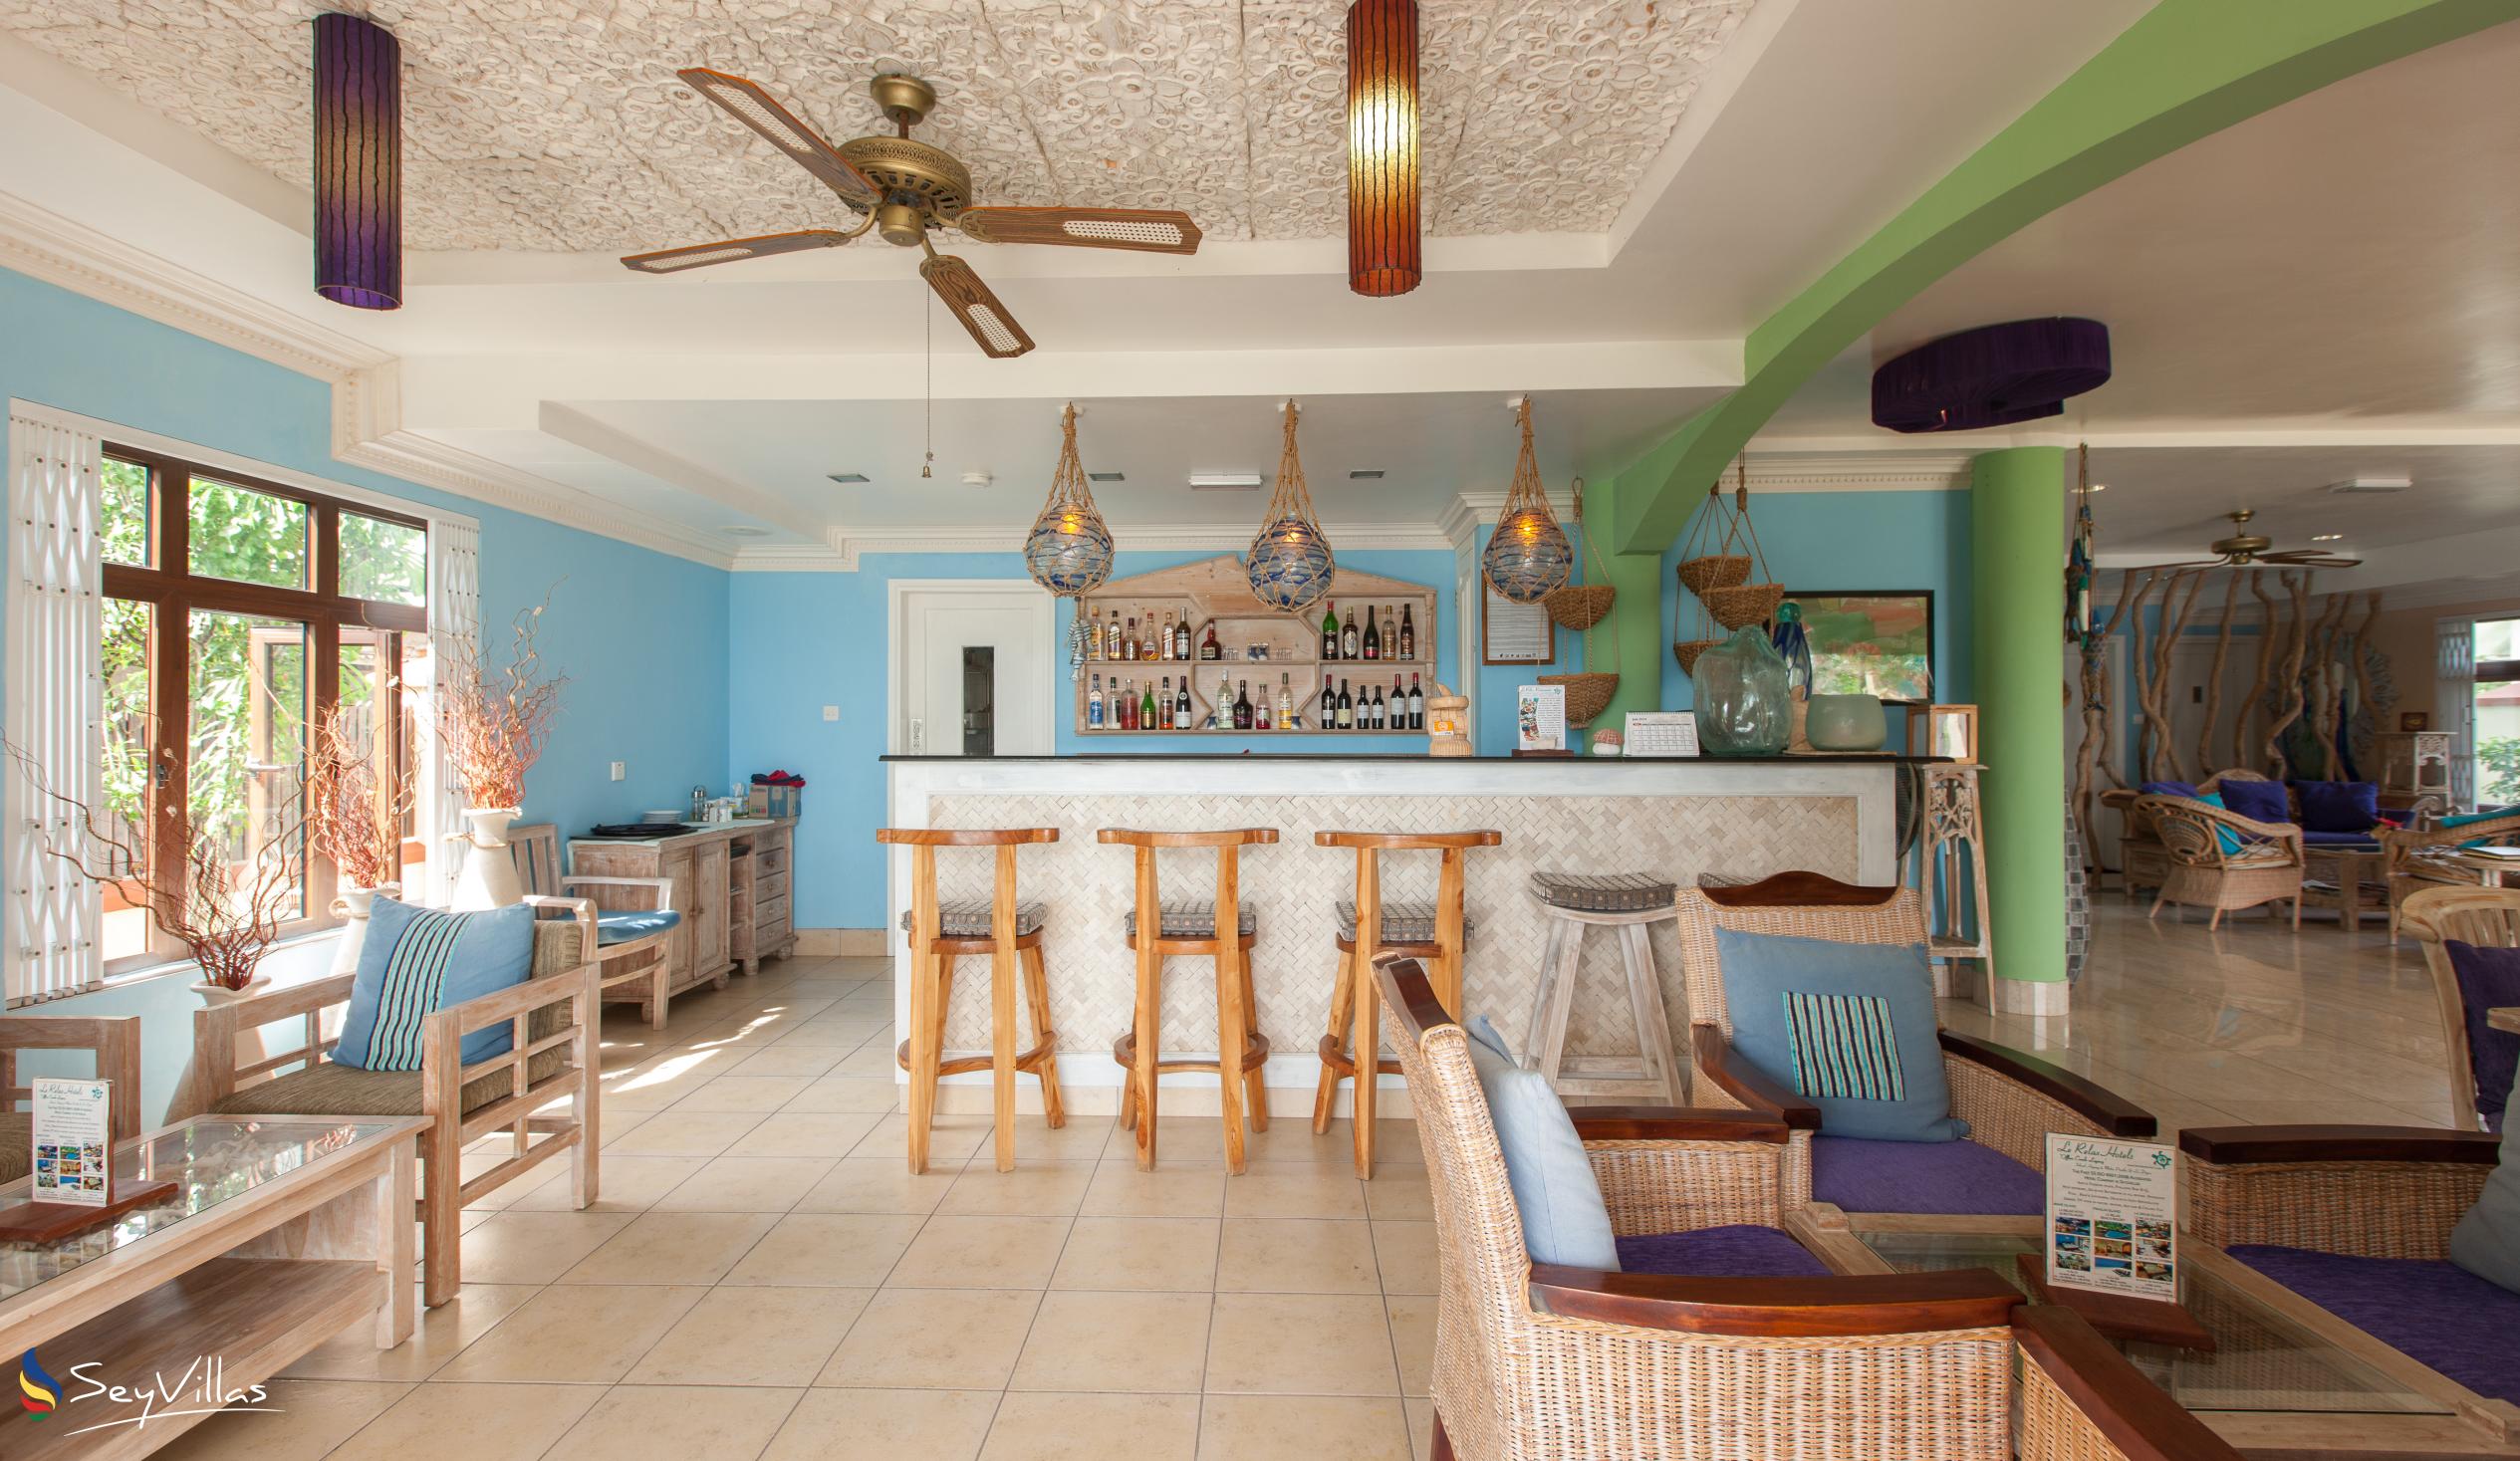 Foto 7: Le Relax Beach House - Interno - La Digue (Seychelles)